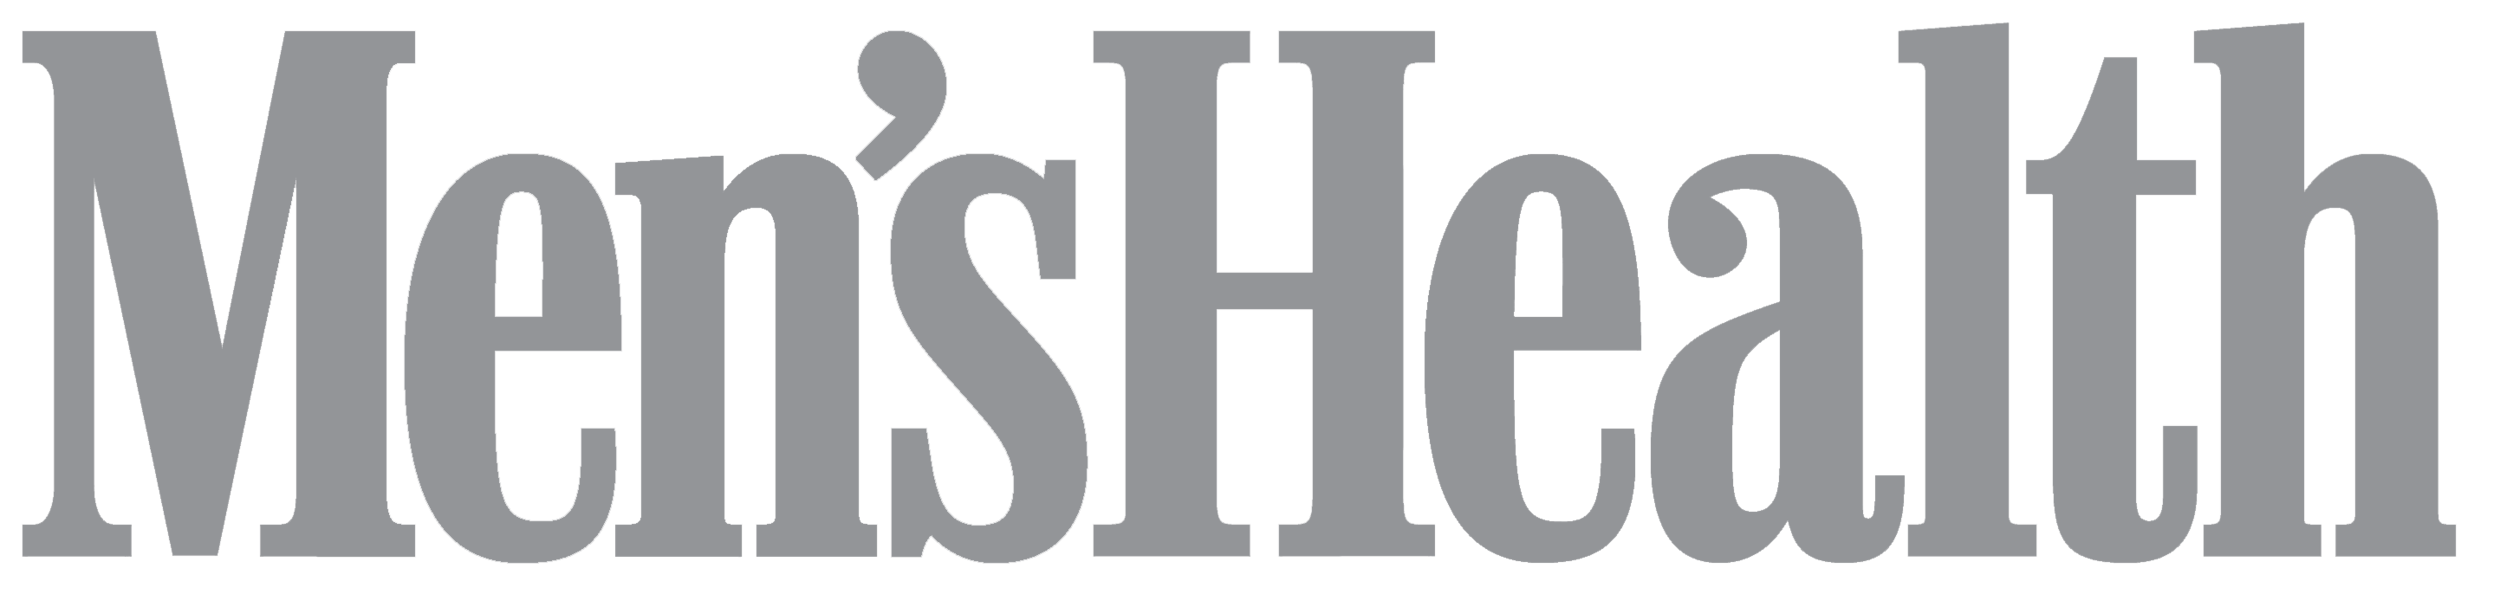 Mens-Health-Logo.png